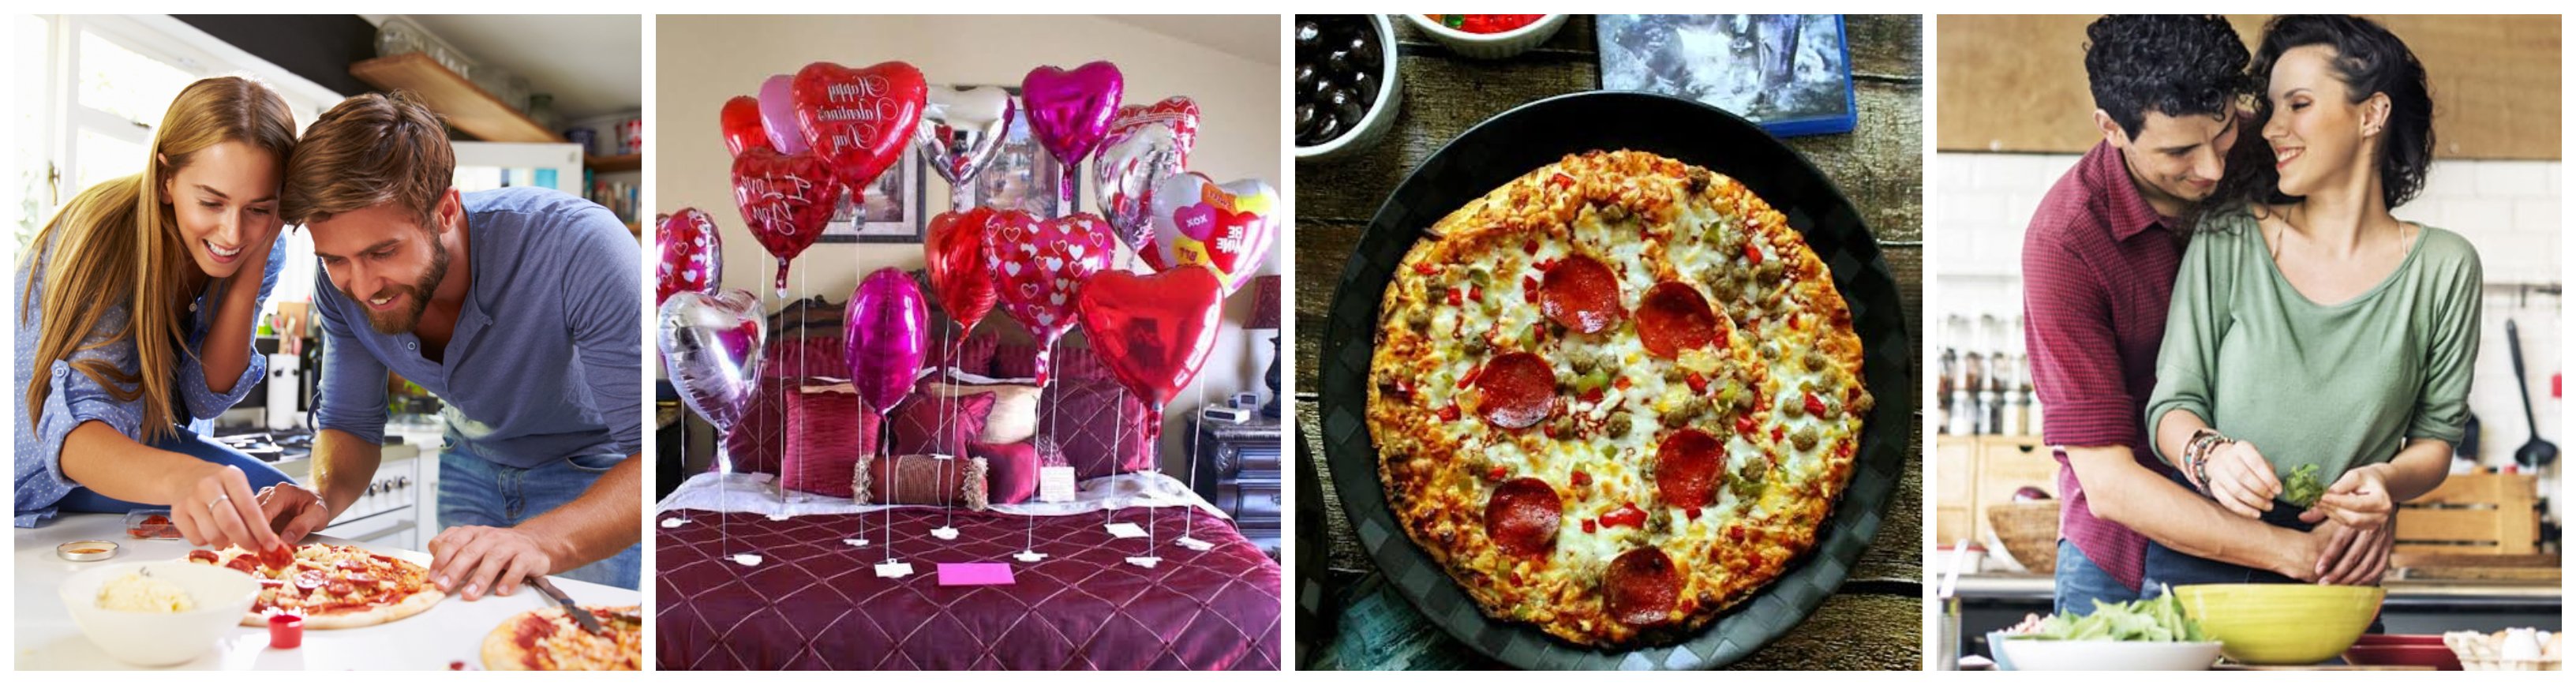 12 Best Last-Minute Valentine’s Day Date Ideas 8